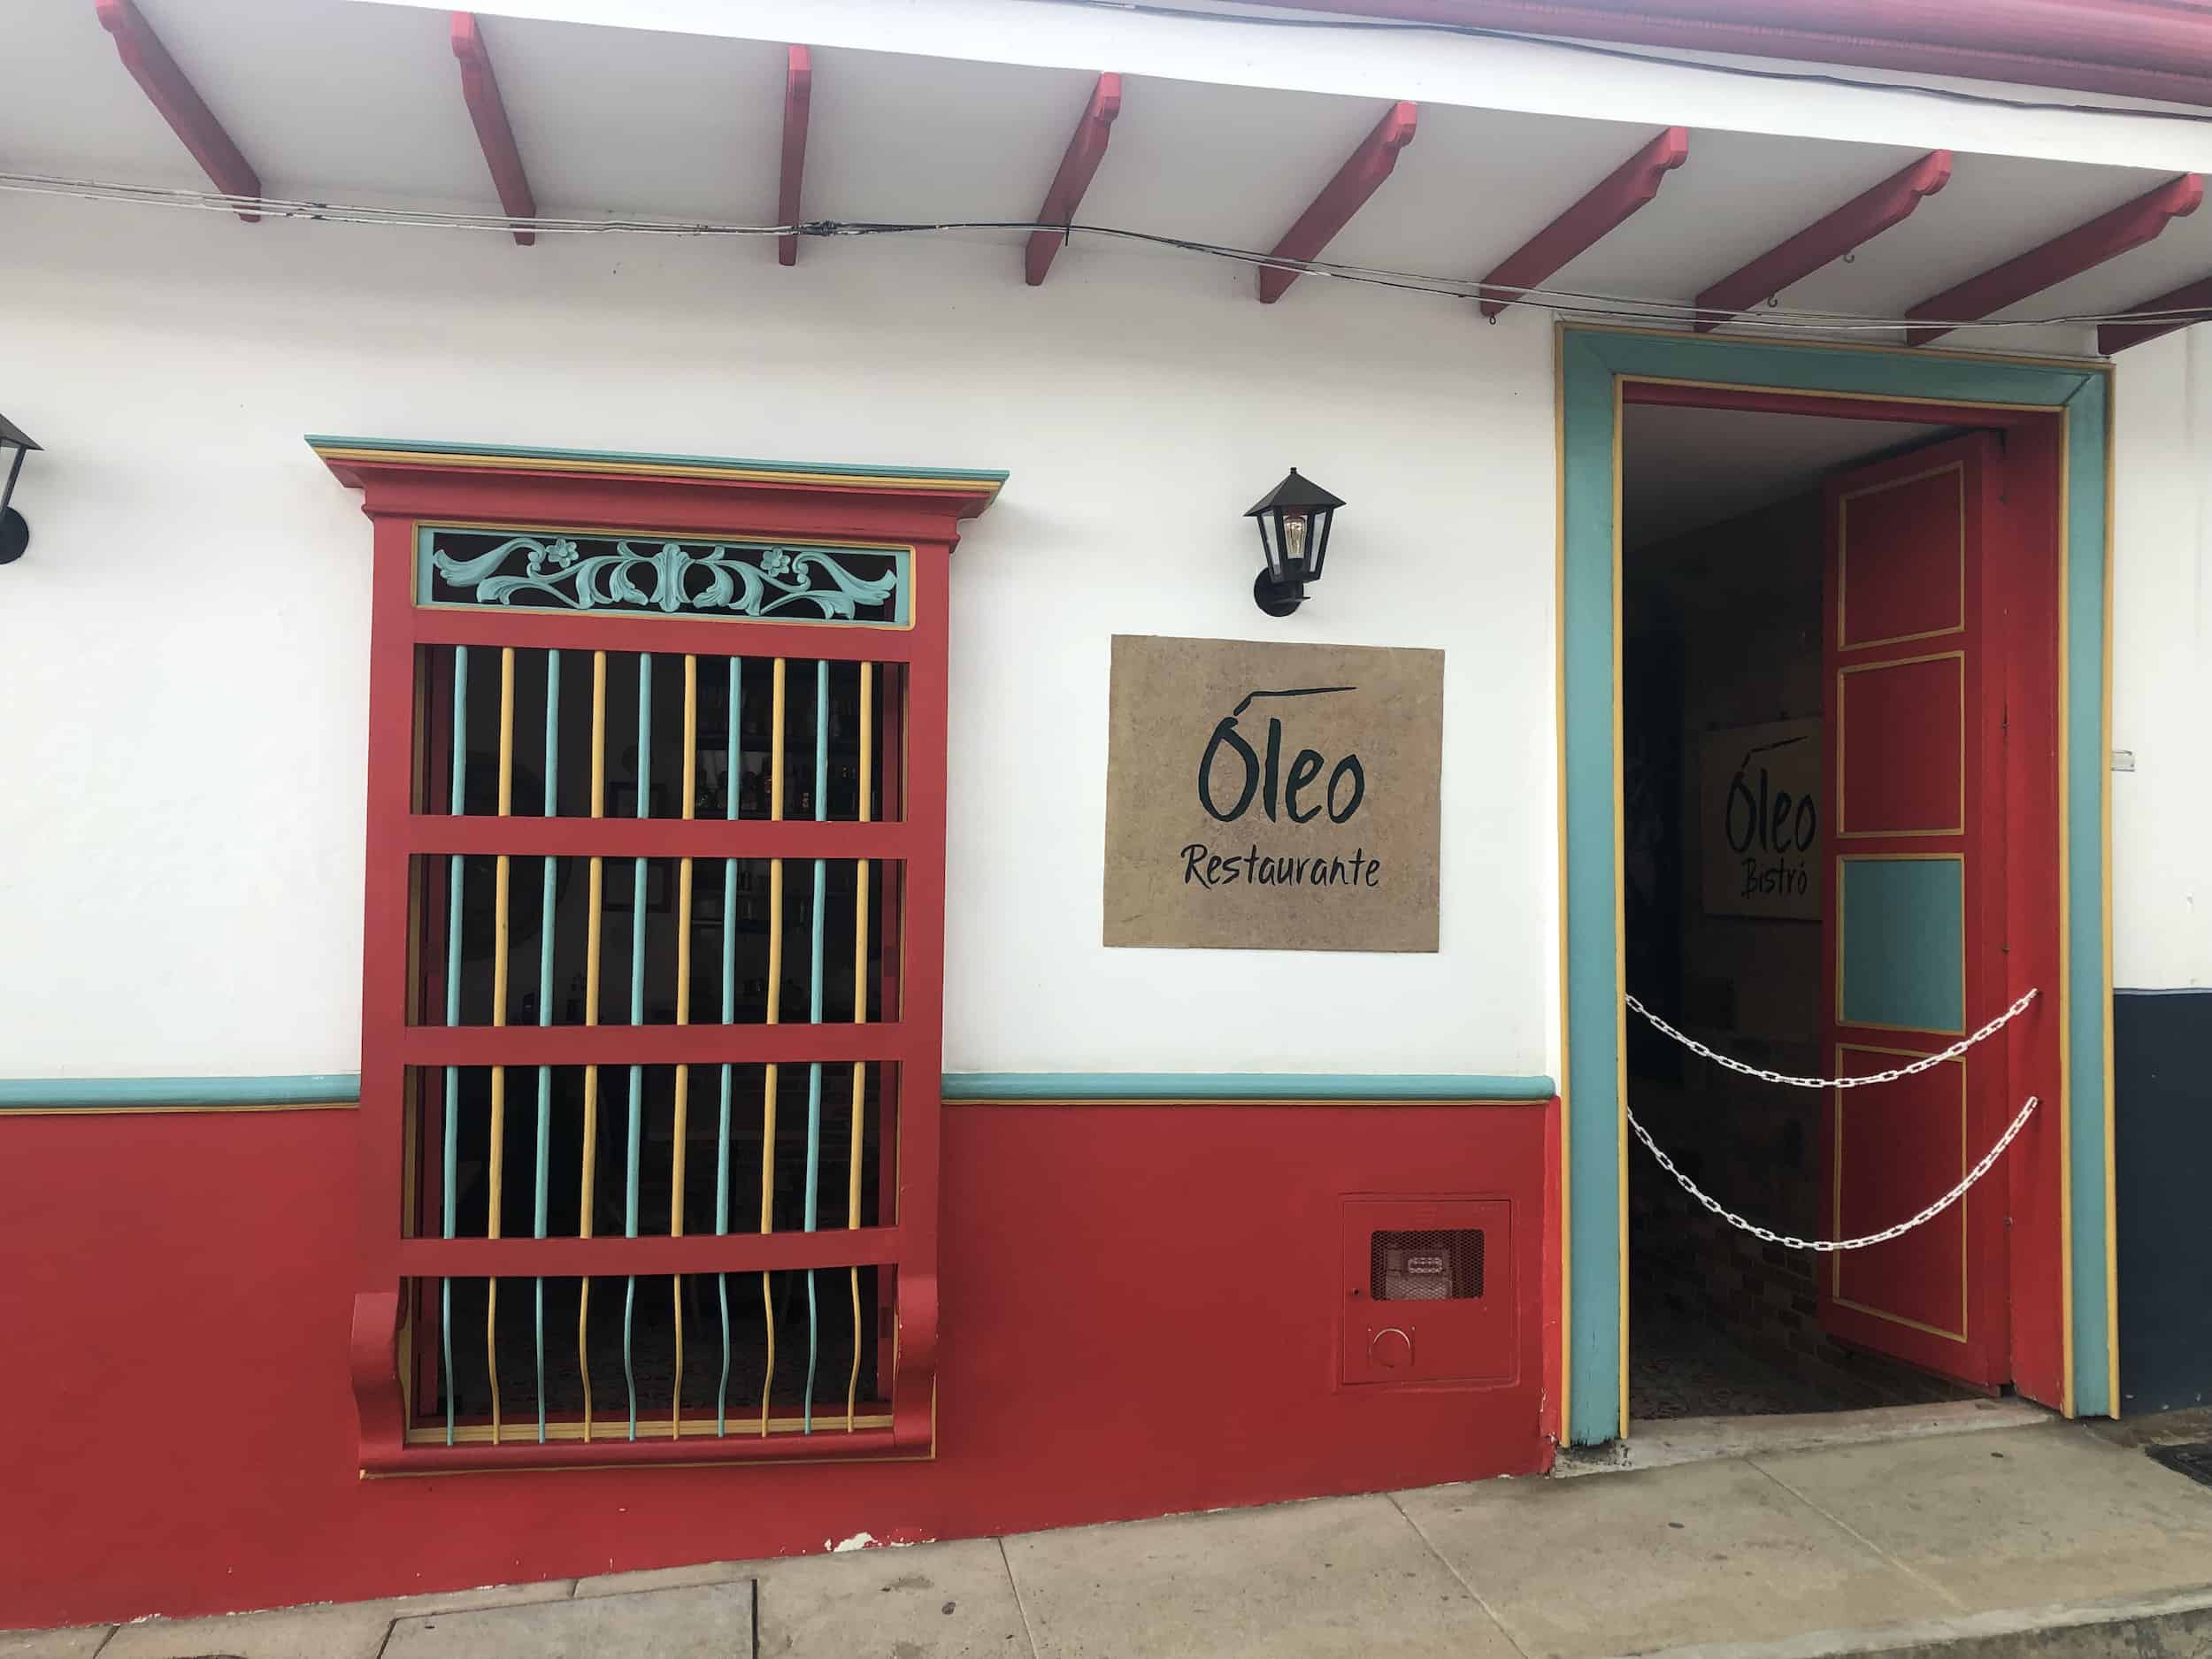 Óleo Bistro in Jardín, Antioquia, Colombia